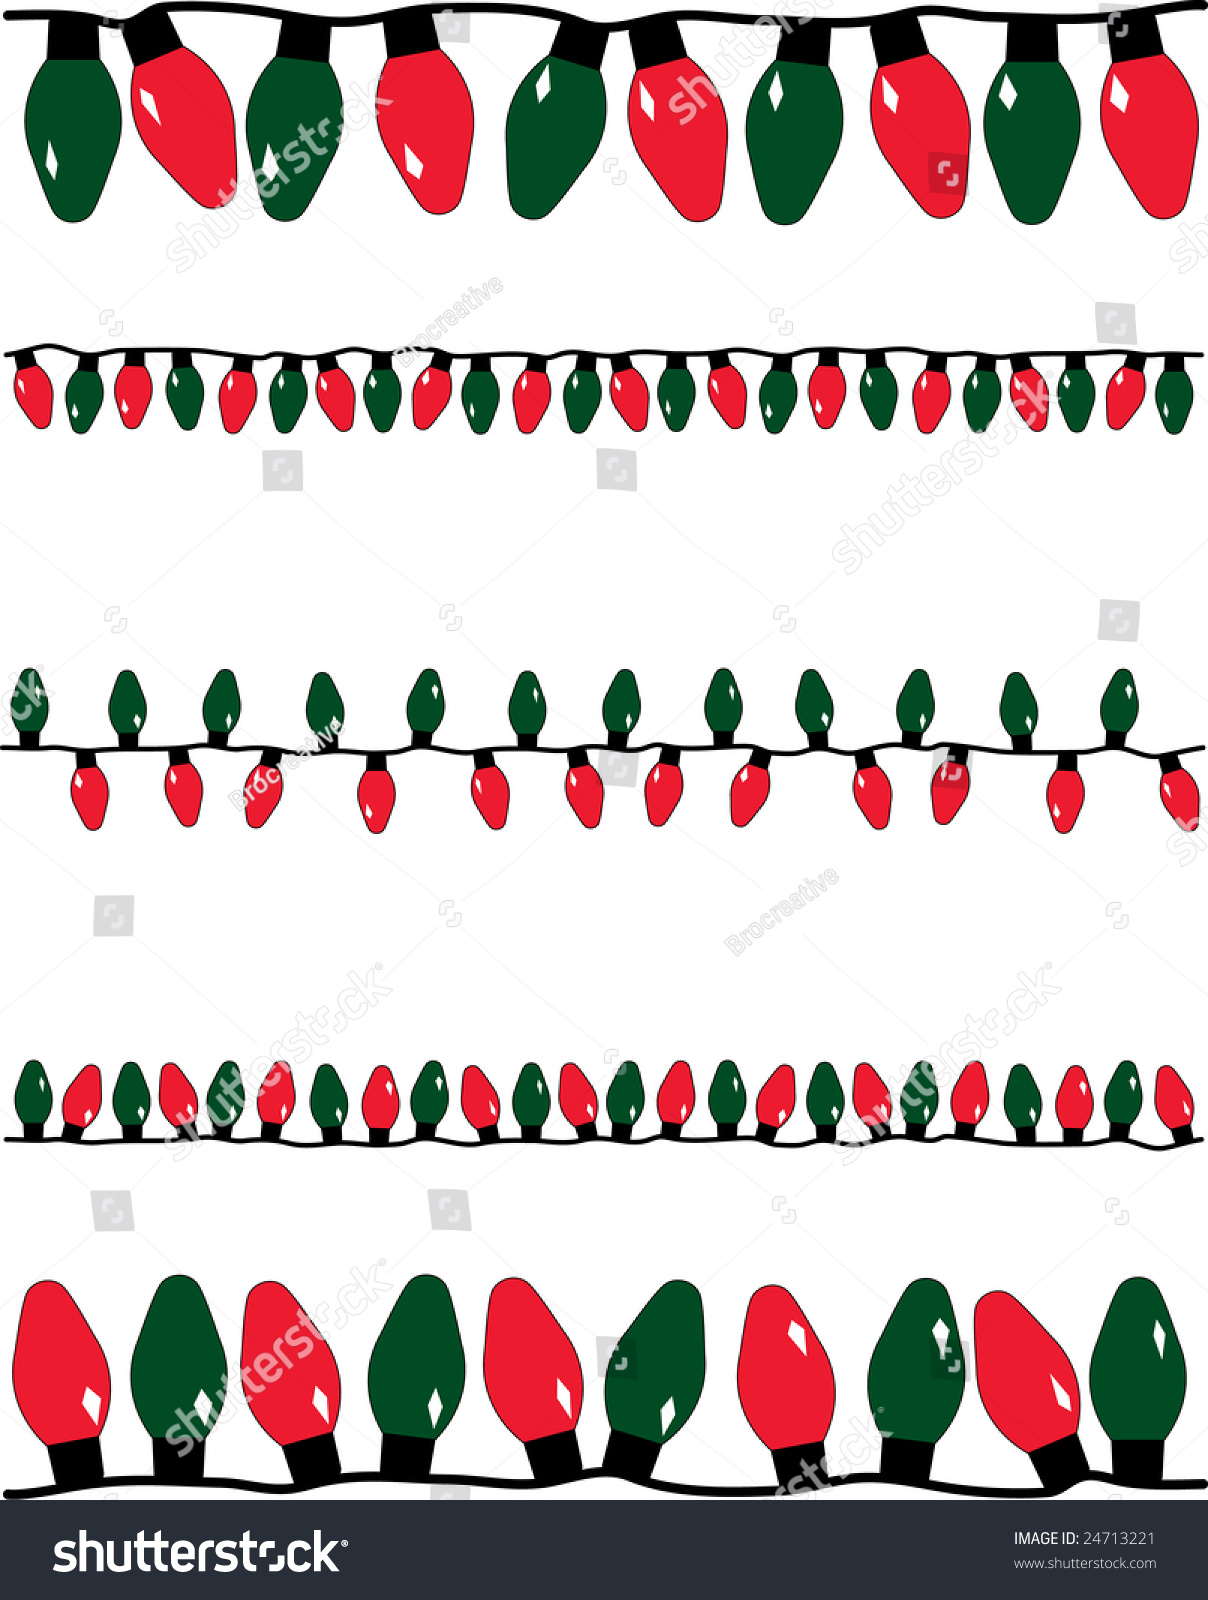 Download Christmas Lights Vector - 24713221 : Shutterstock